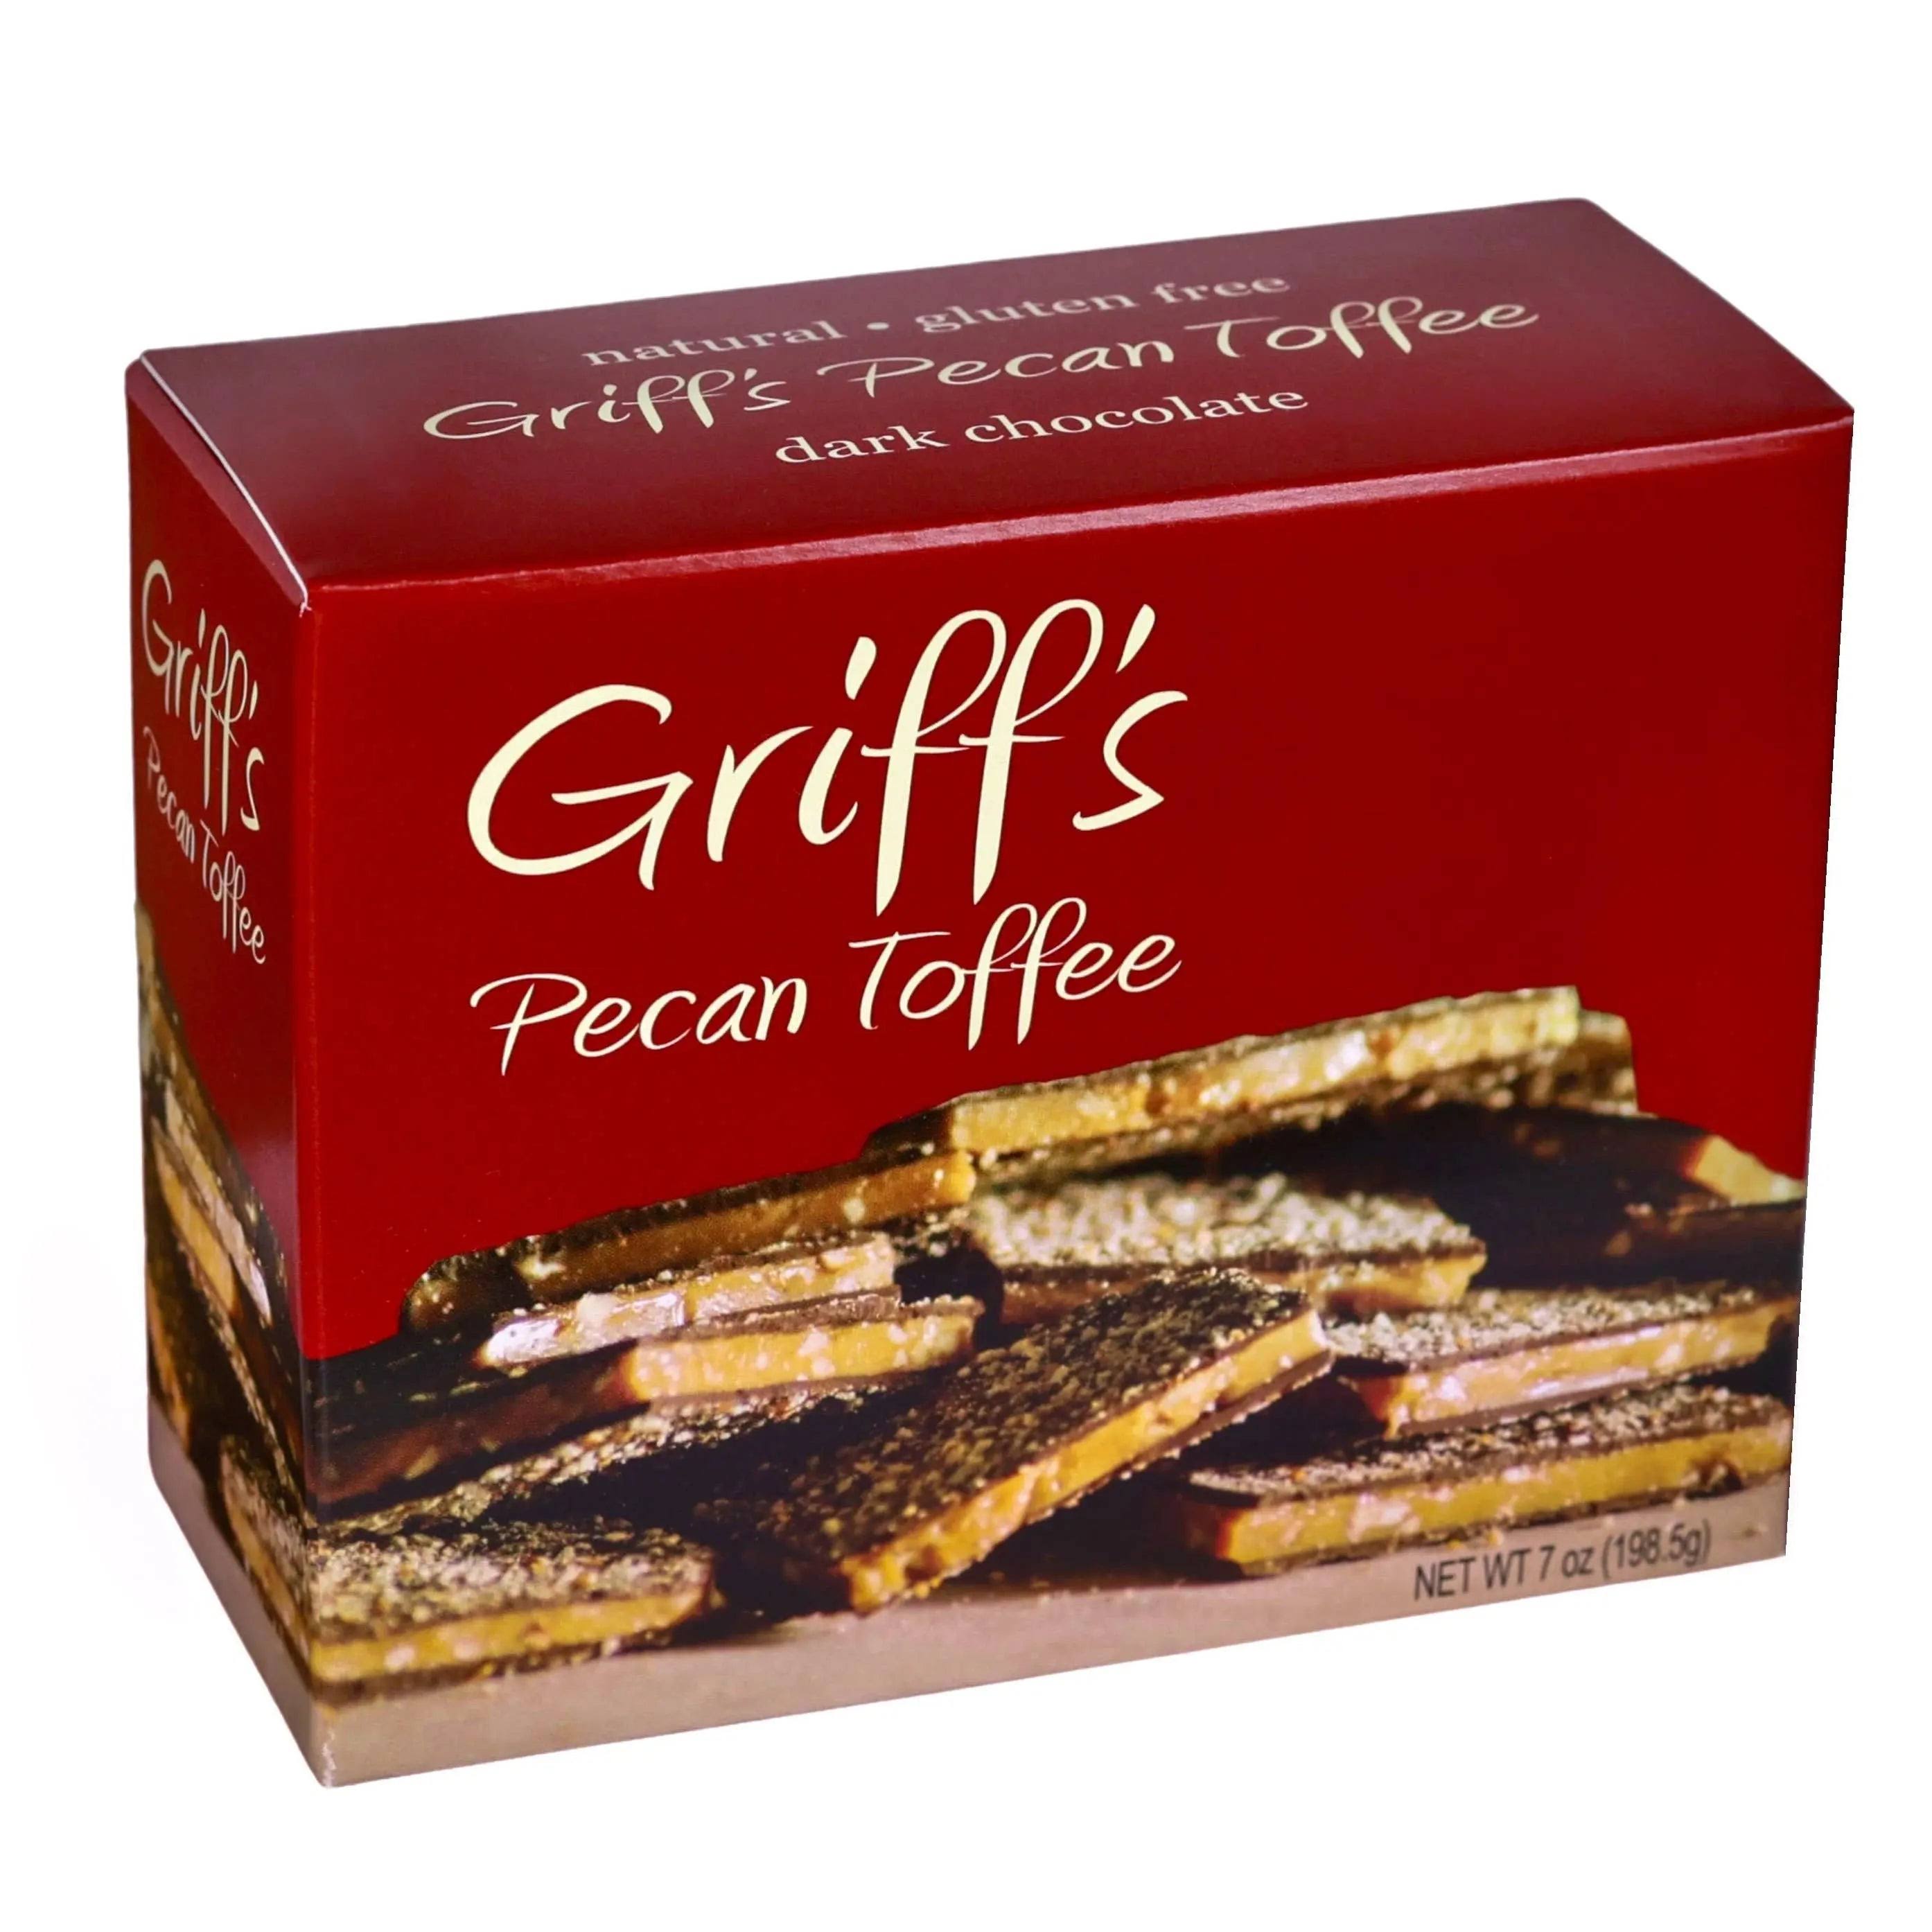 Griff's Pecan Toffee - 7 oz